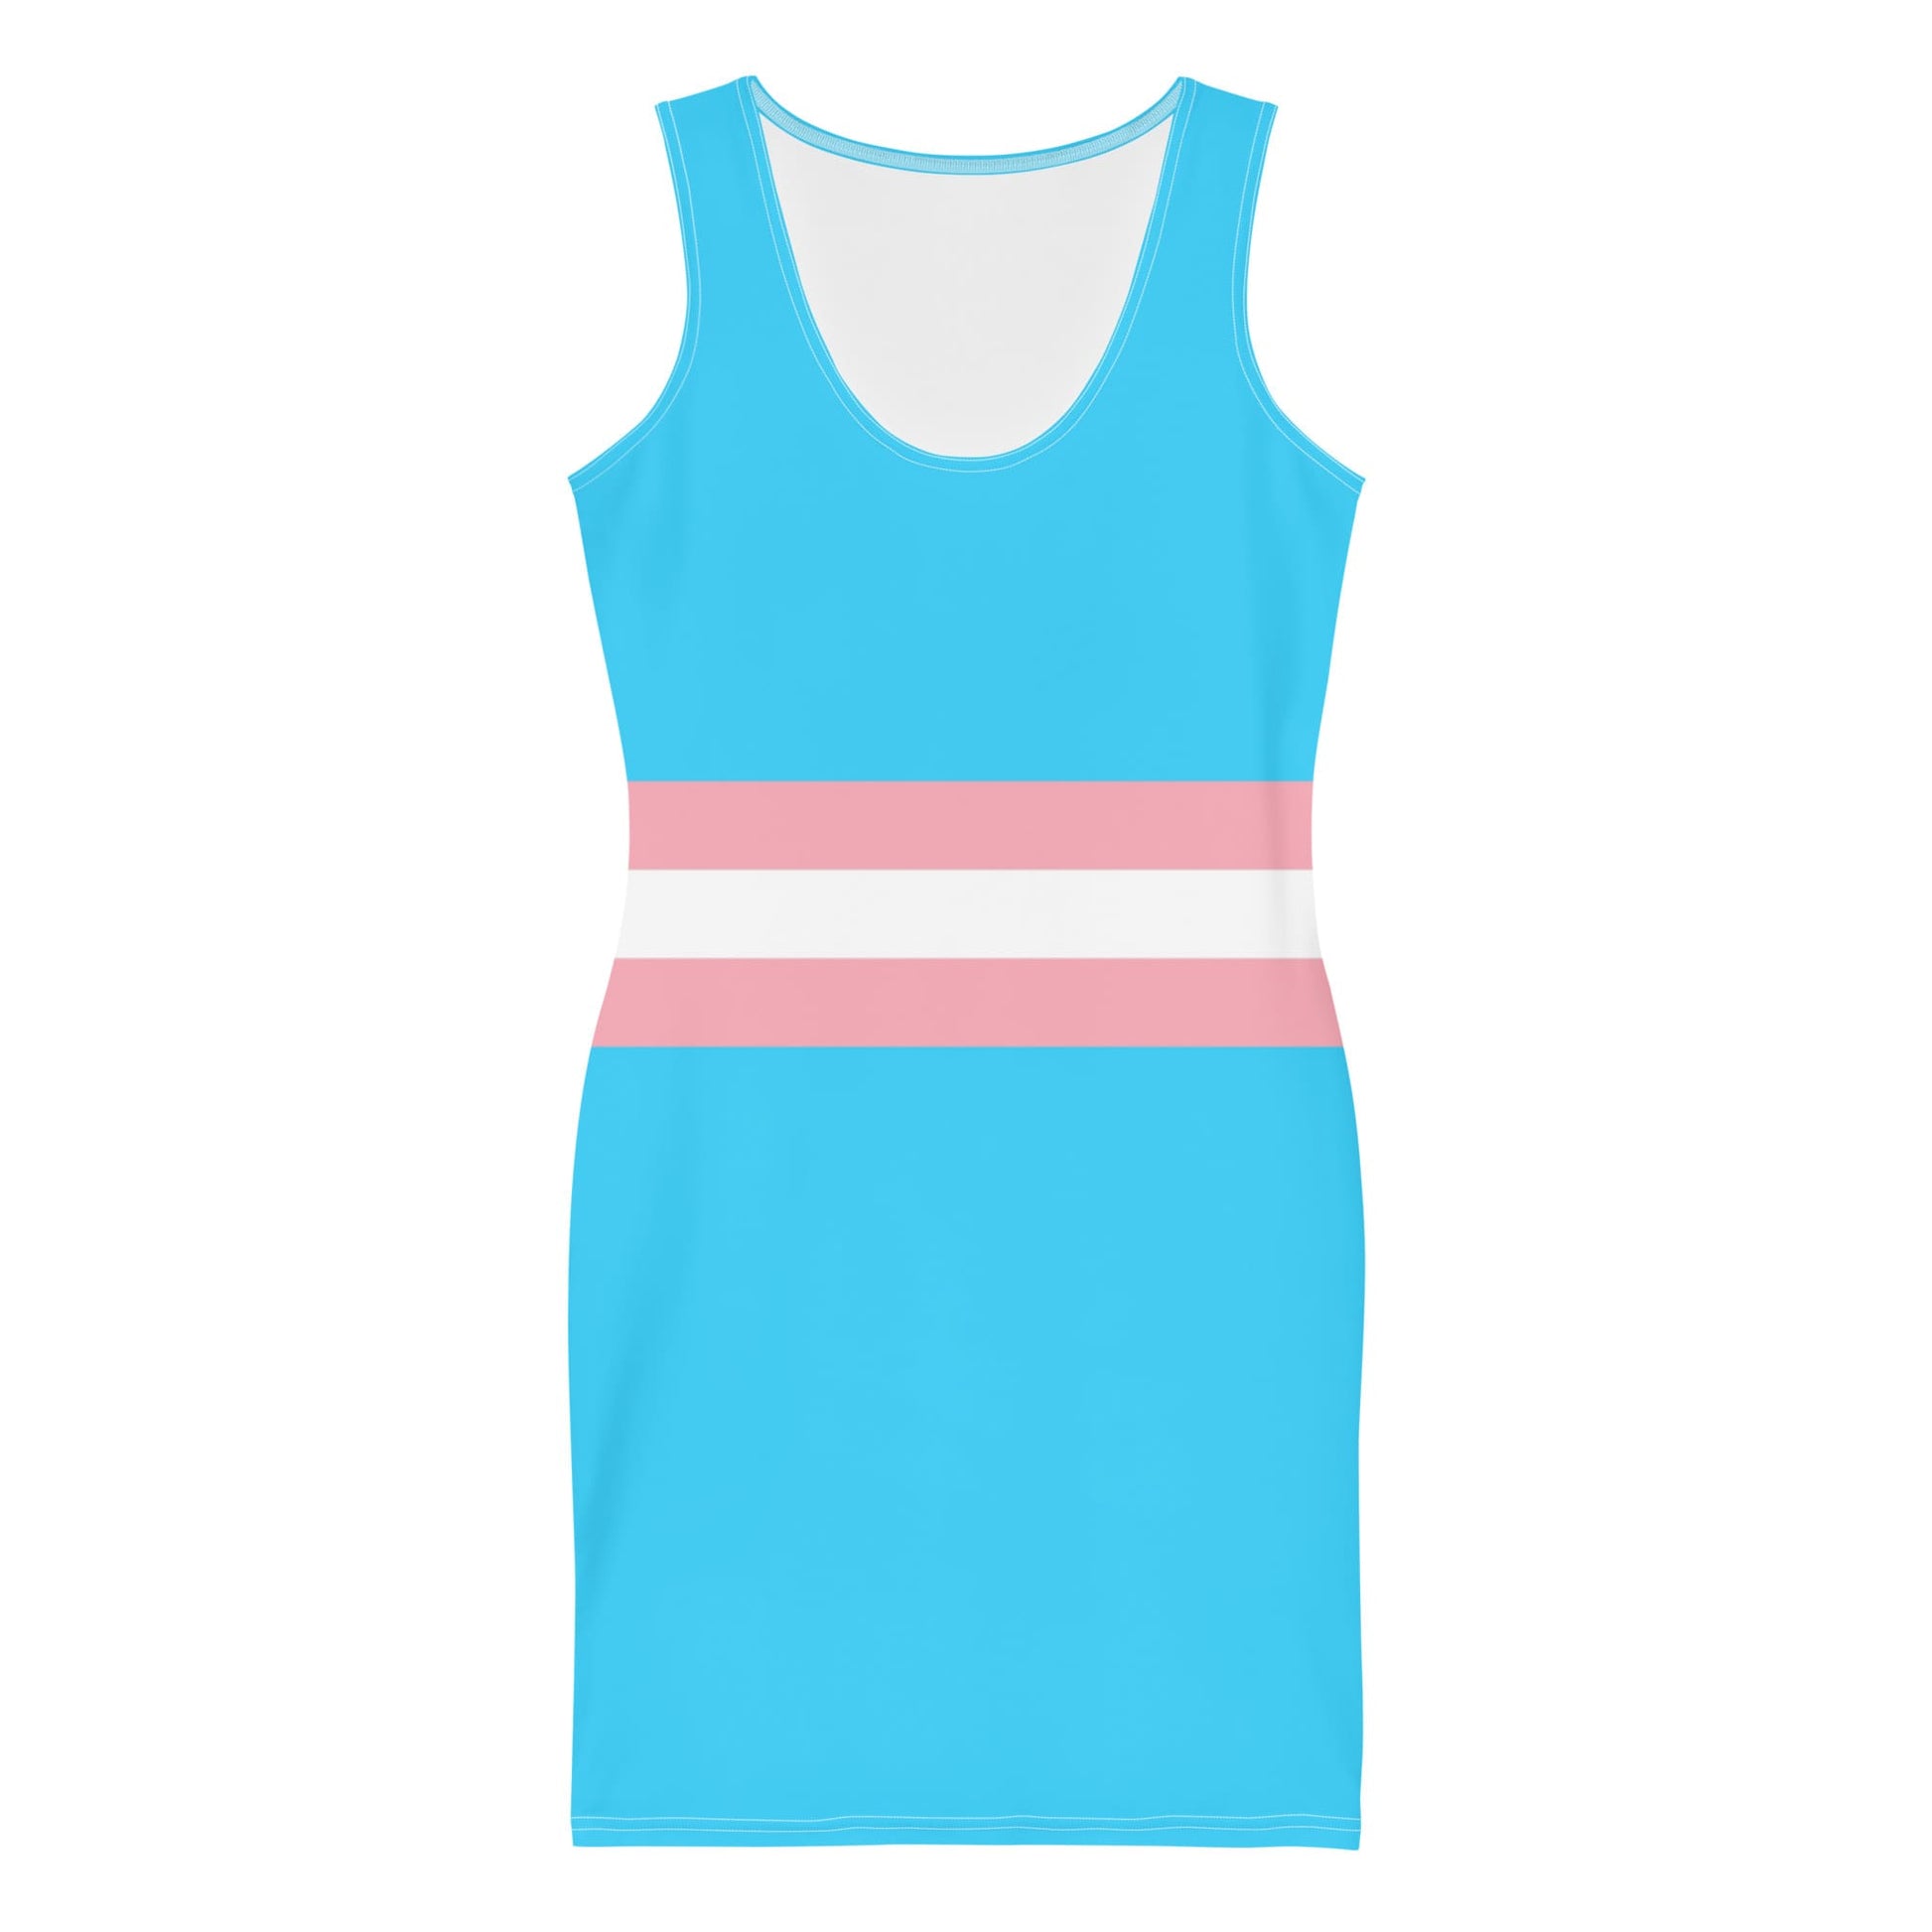 Transgender dress, flatlay front